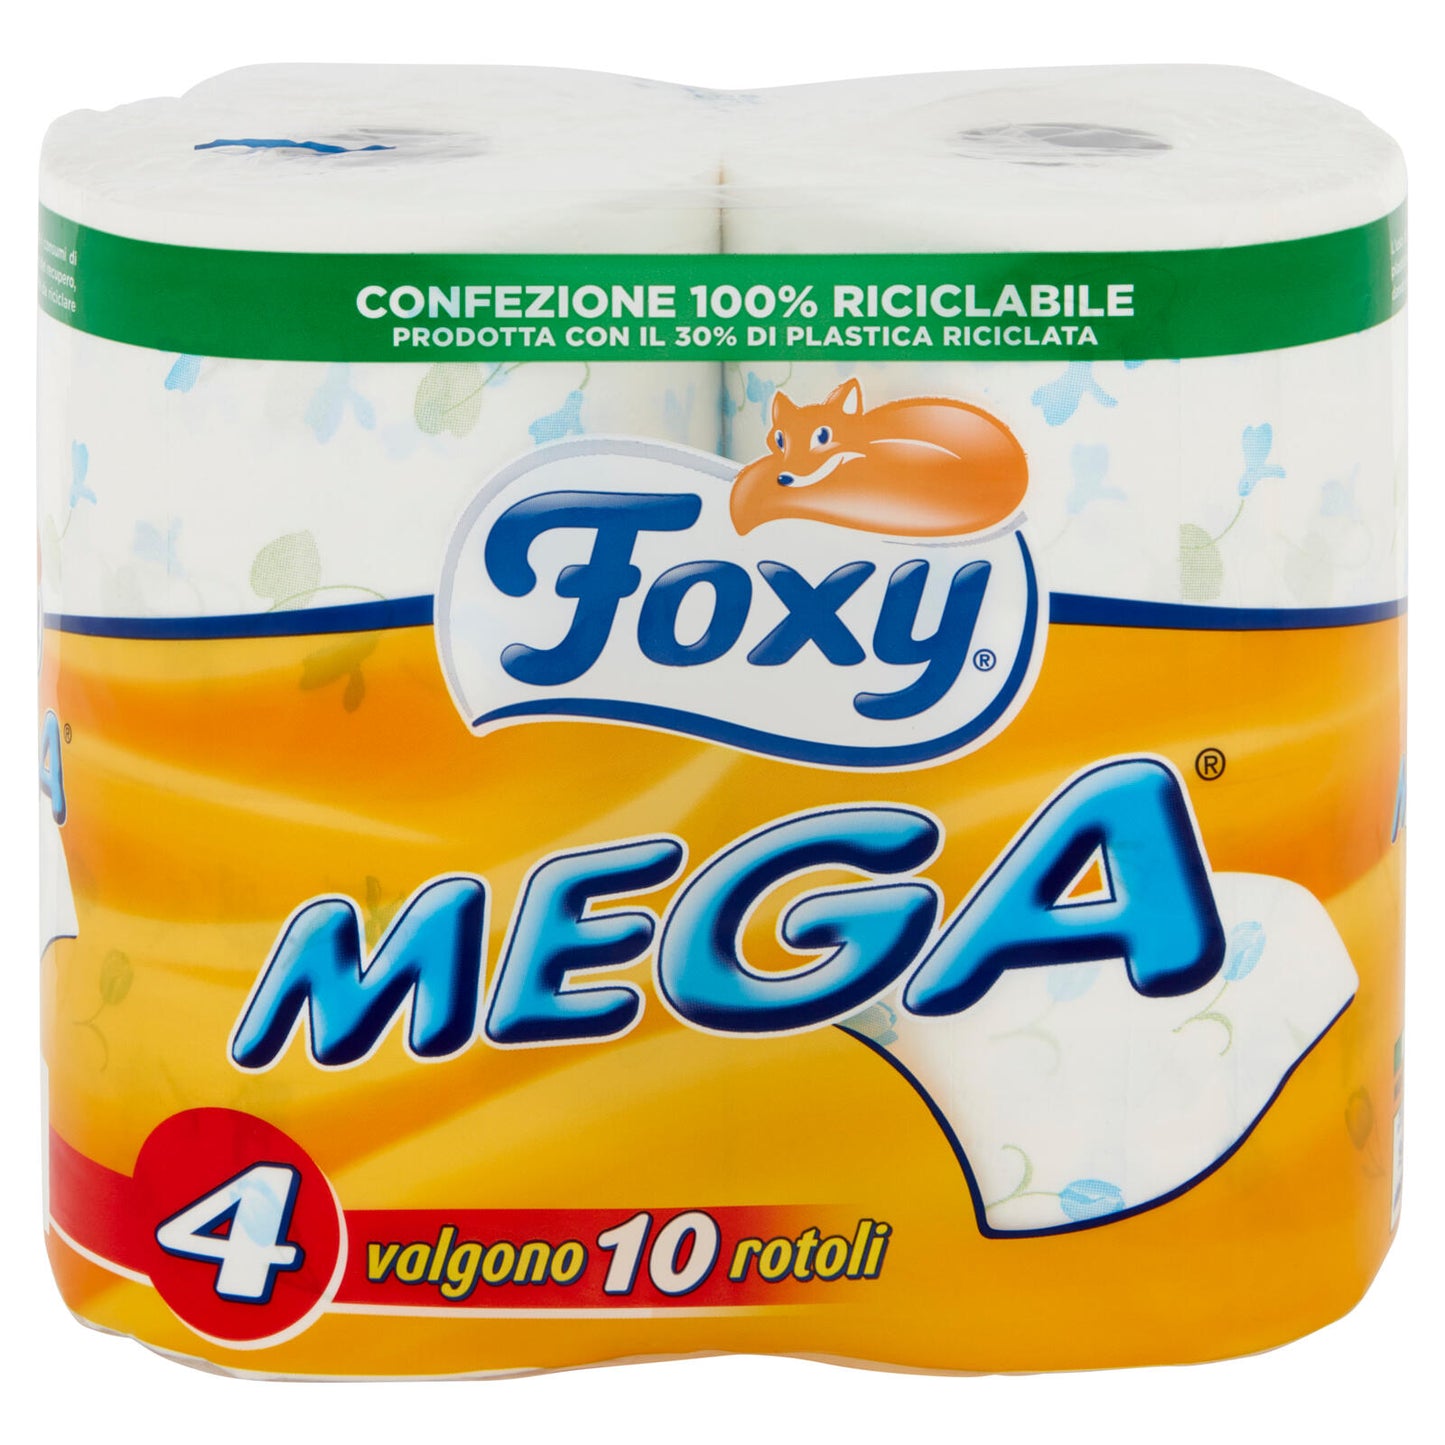 Foxy Mega 4 pz